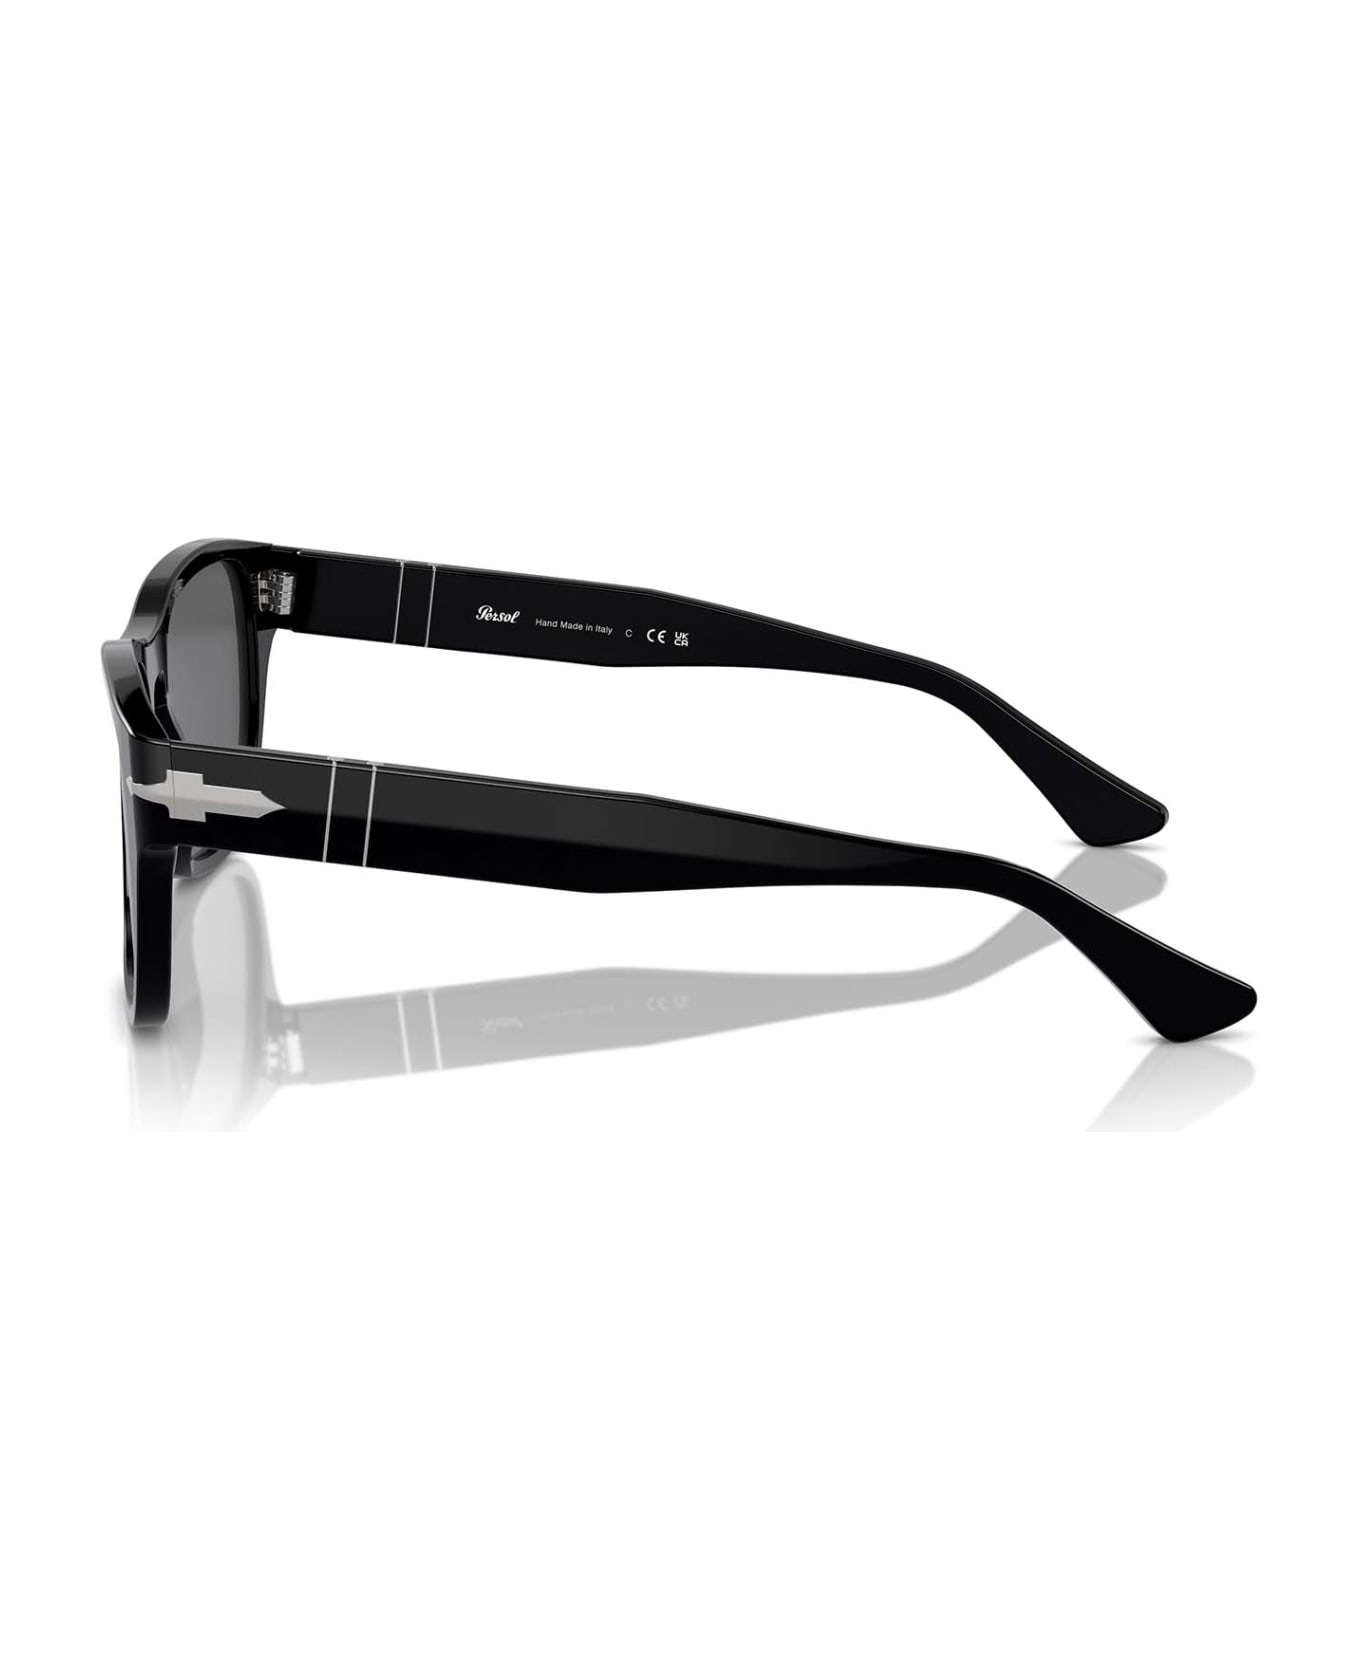 Persol Po3341s Black Sunglasses - Black サングラス